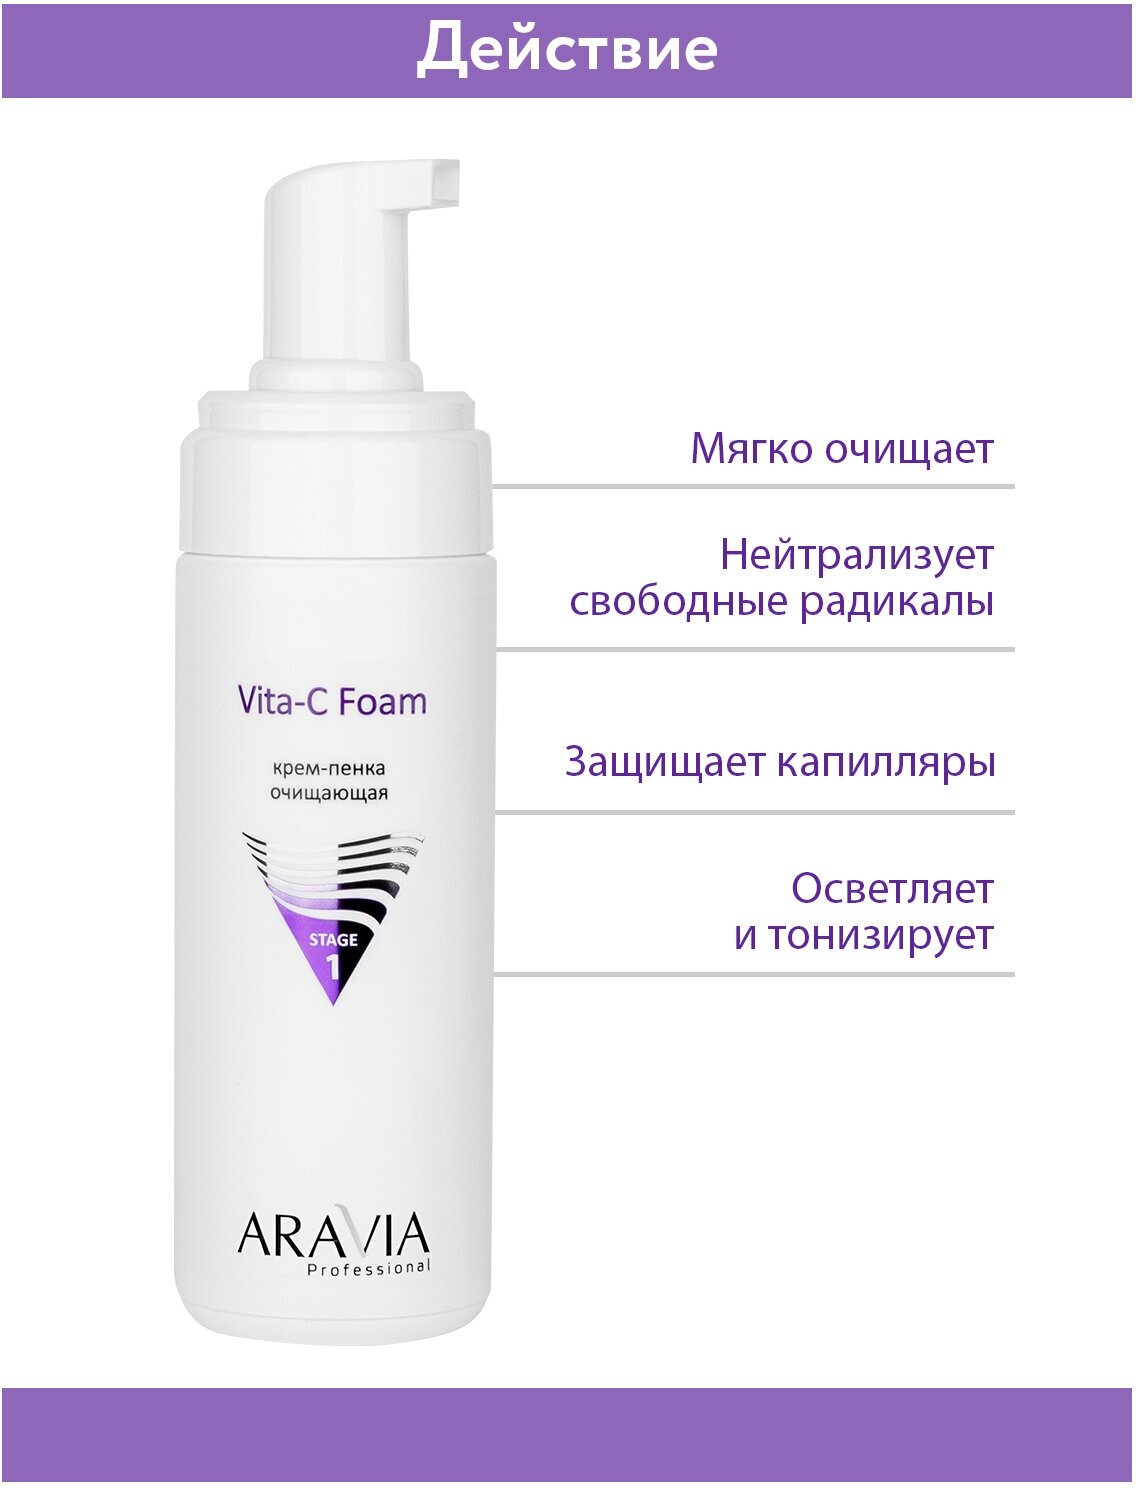 ARAVIA Крем-пенка очищающая Vita-C Foaming, 160 мл